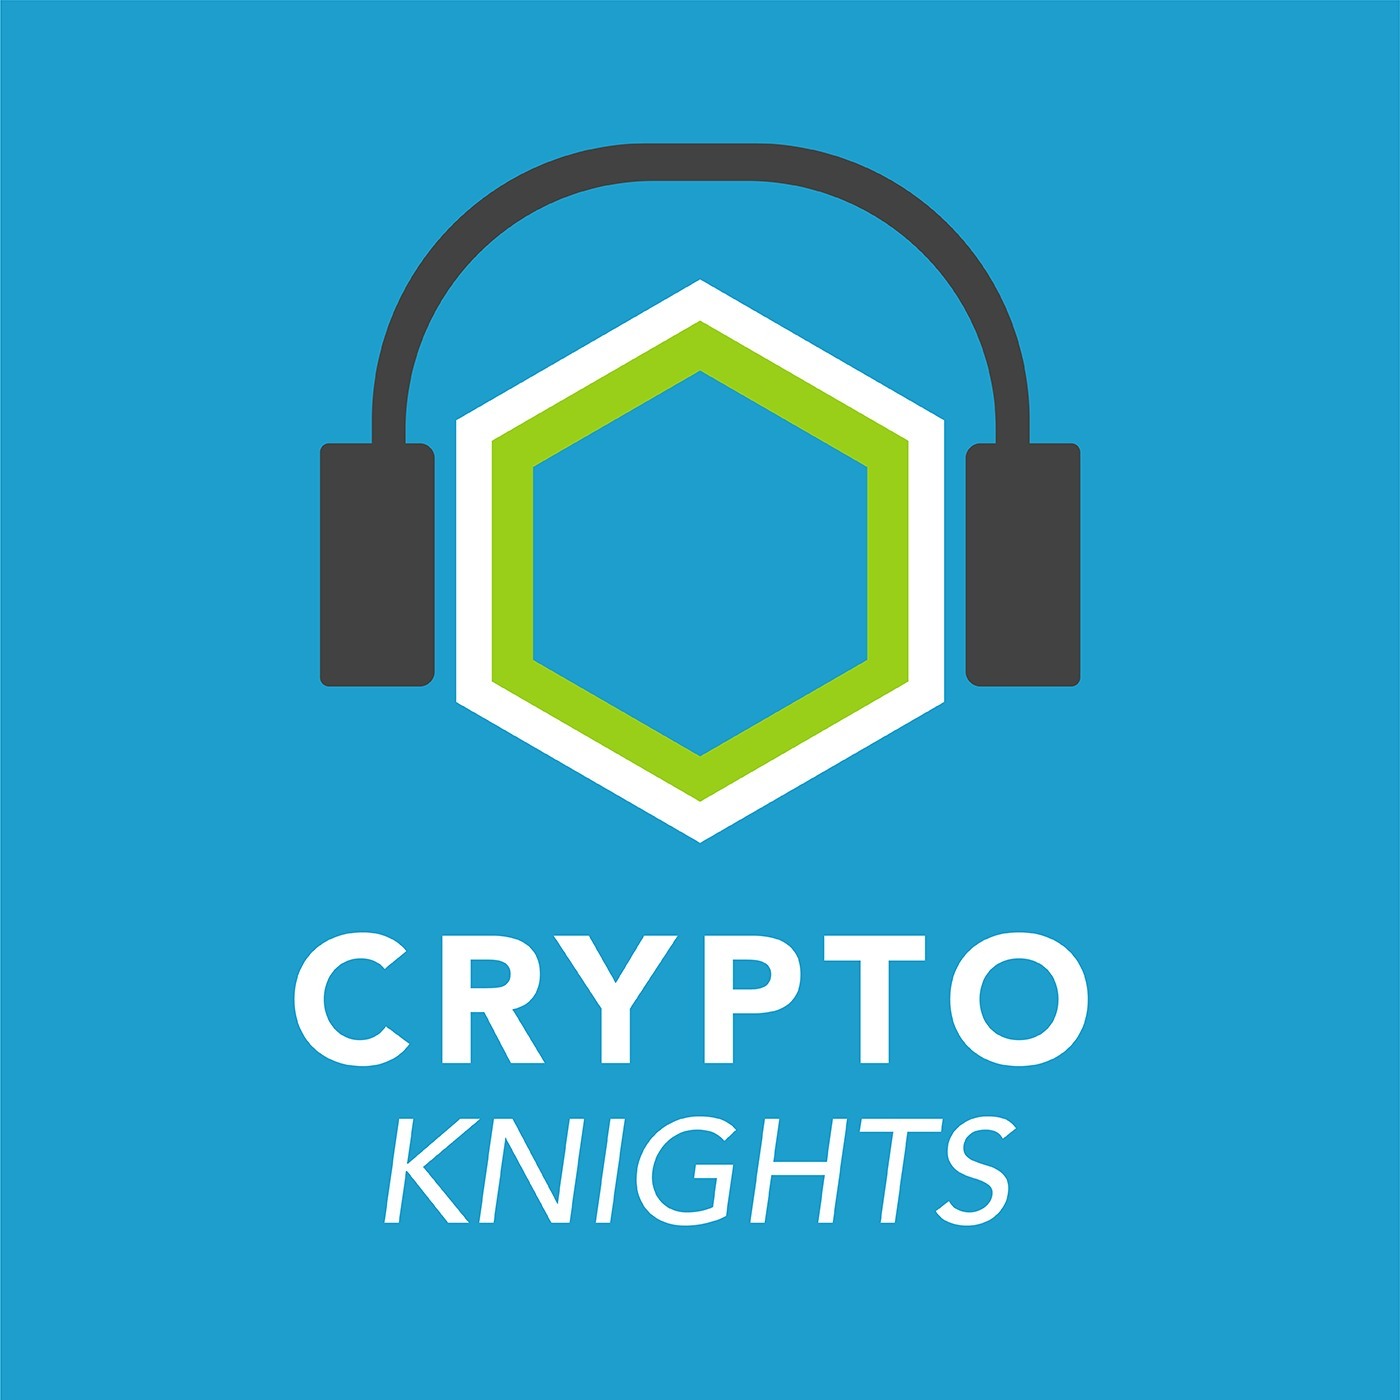 Cryptoknights Top Podcast On Bitcoin Ethereum Blockchain Crypto - 